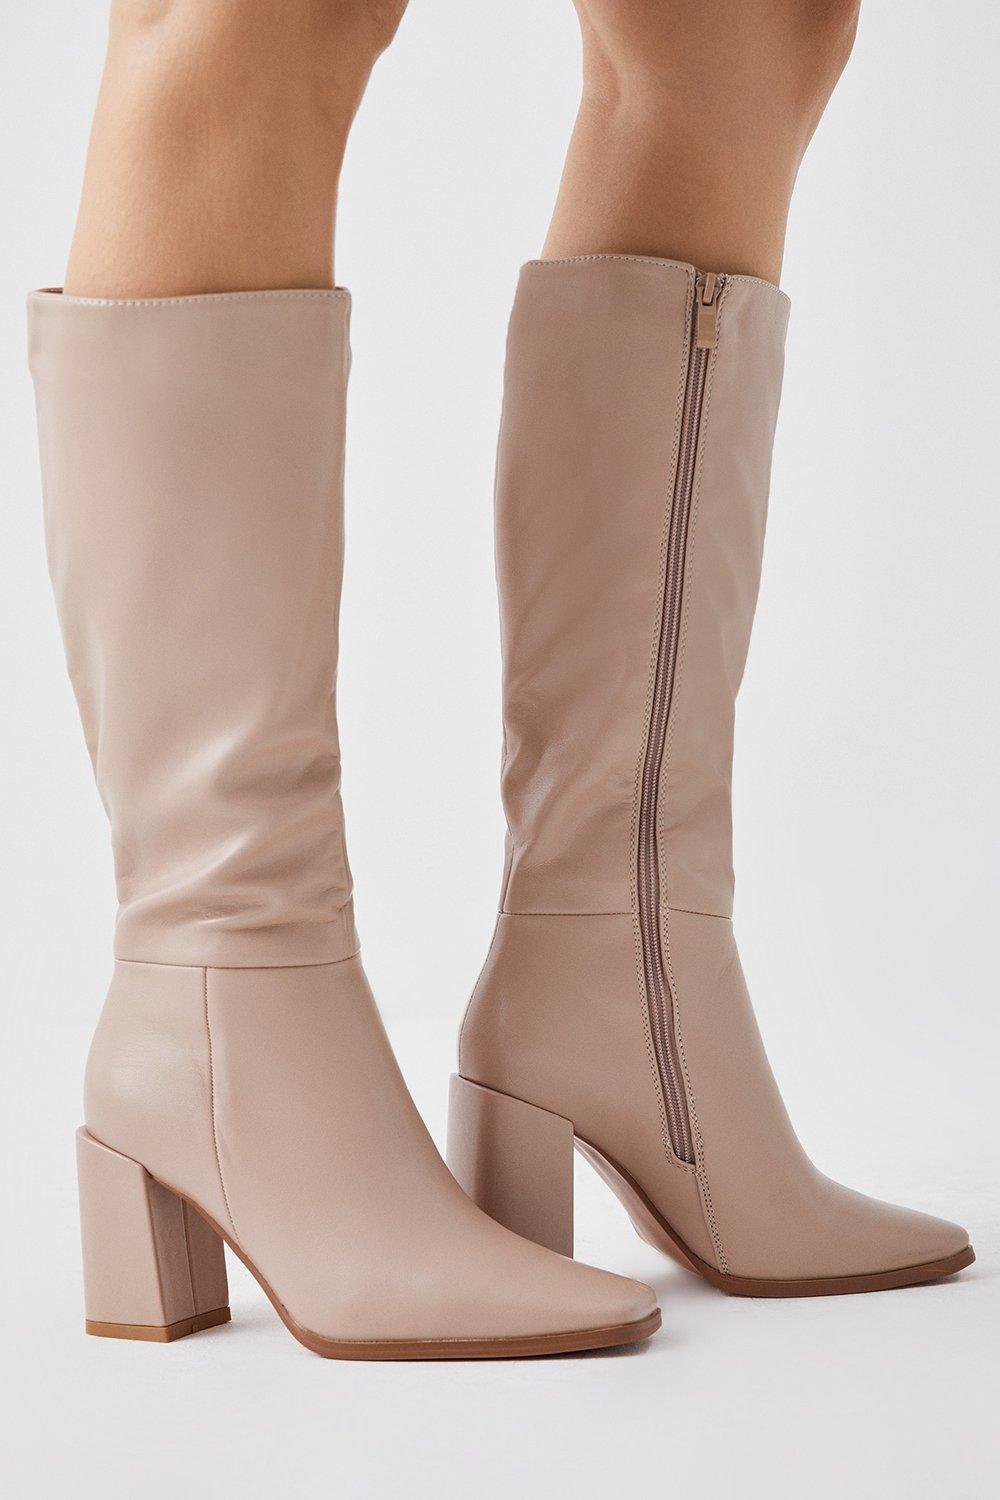 Women’s Kristen Square Toe Clean Knee High Boots - beige - 8